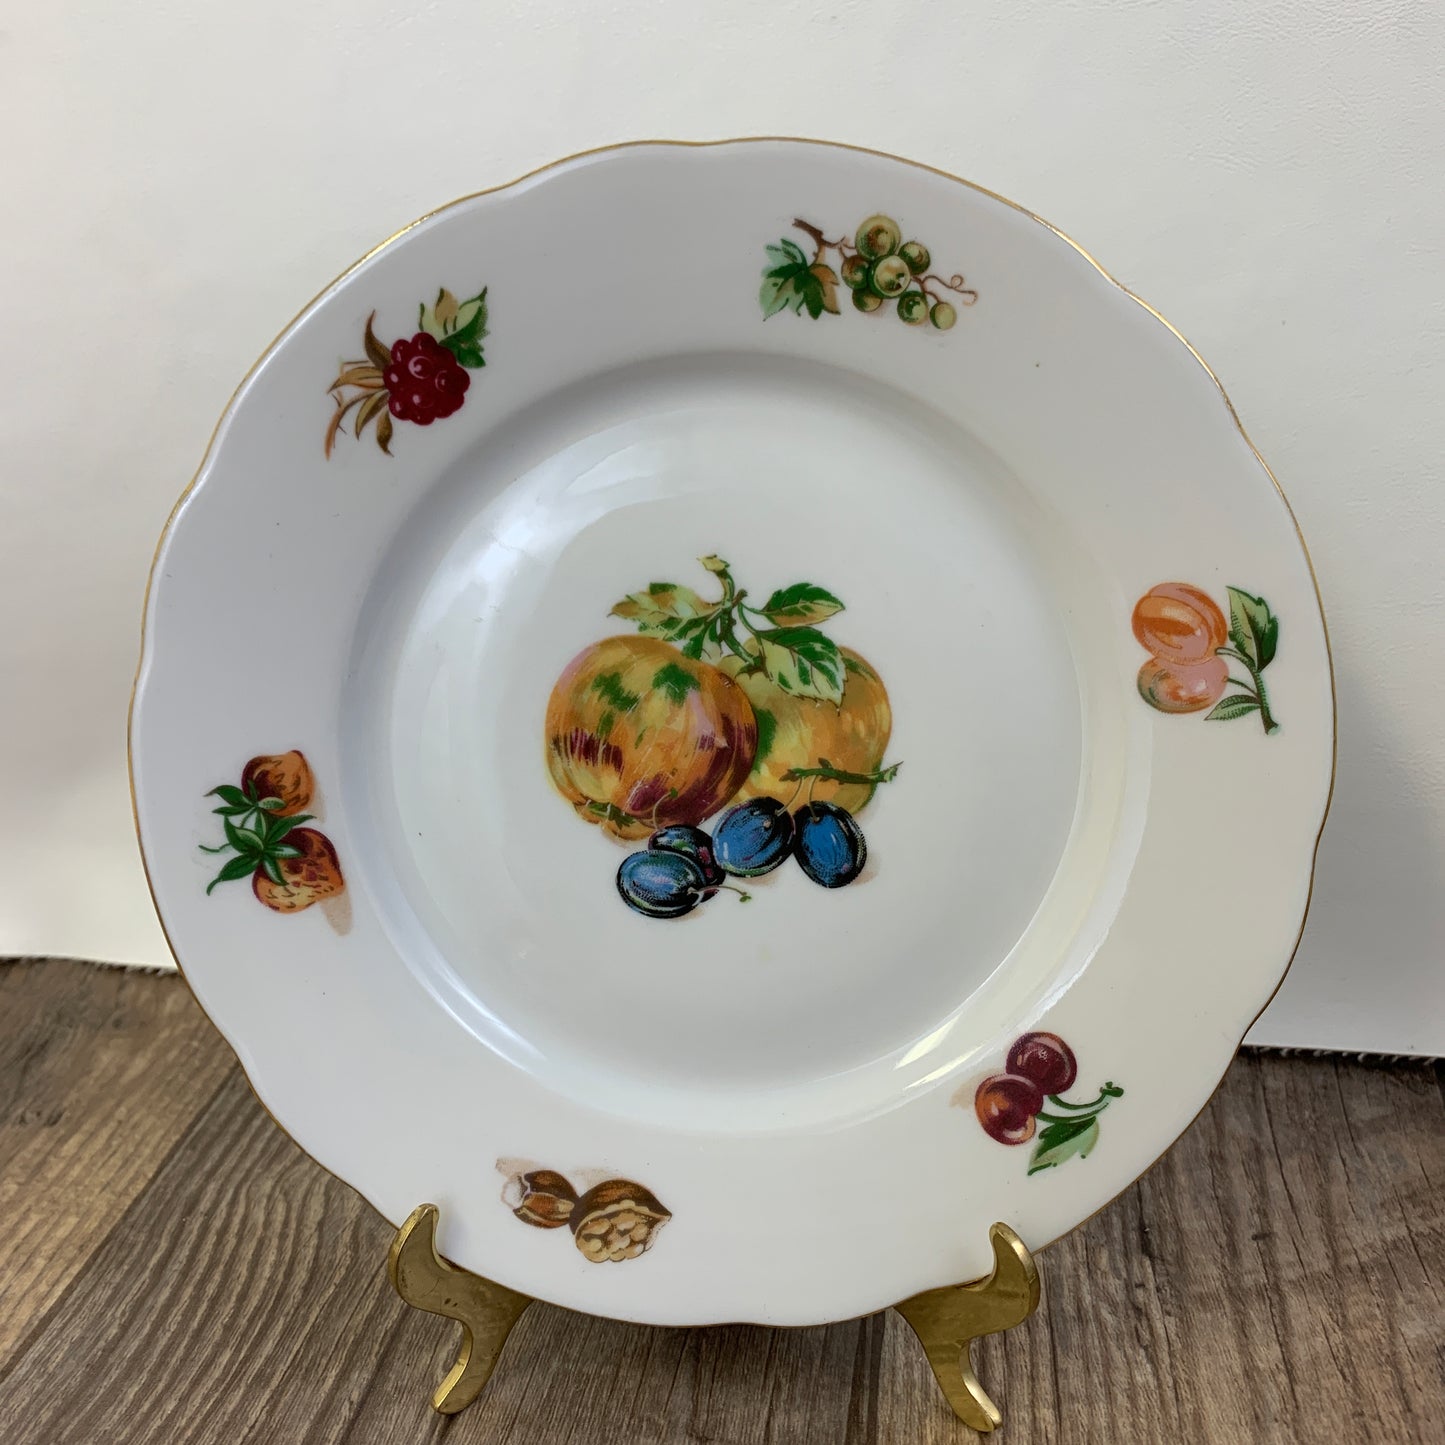 Set of 3 Vintage China Plates, Salad Plates, Dessert Plates Made in Czechoslovakia